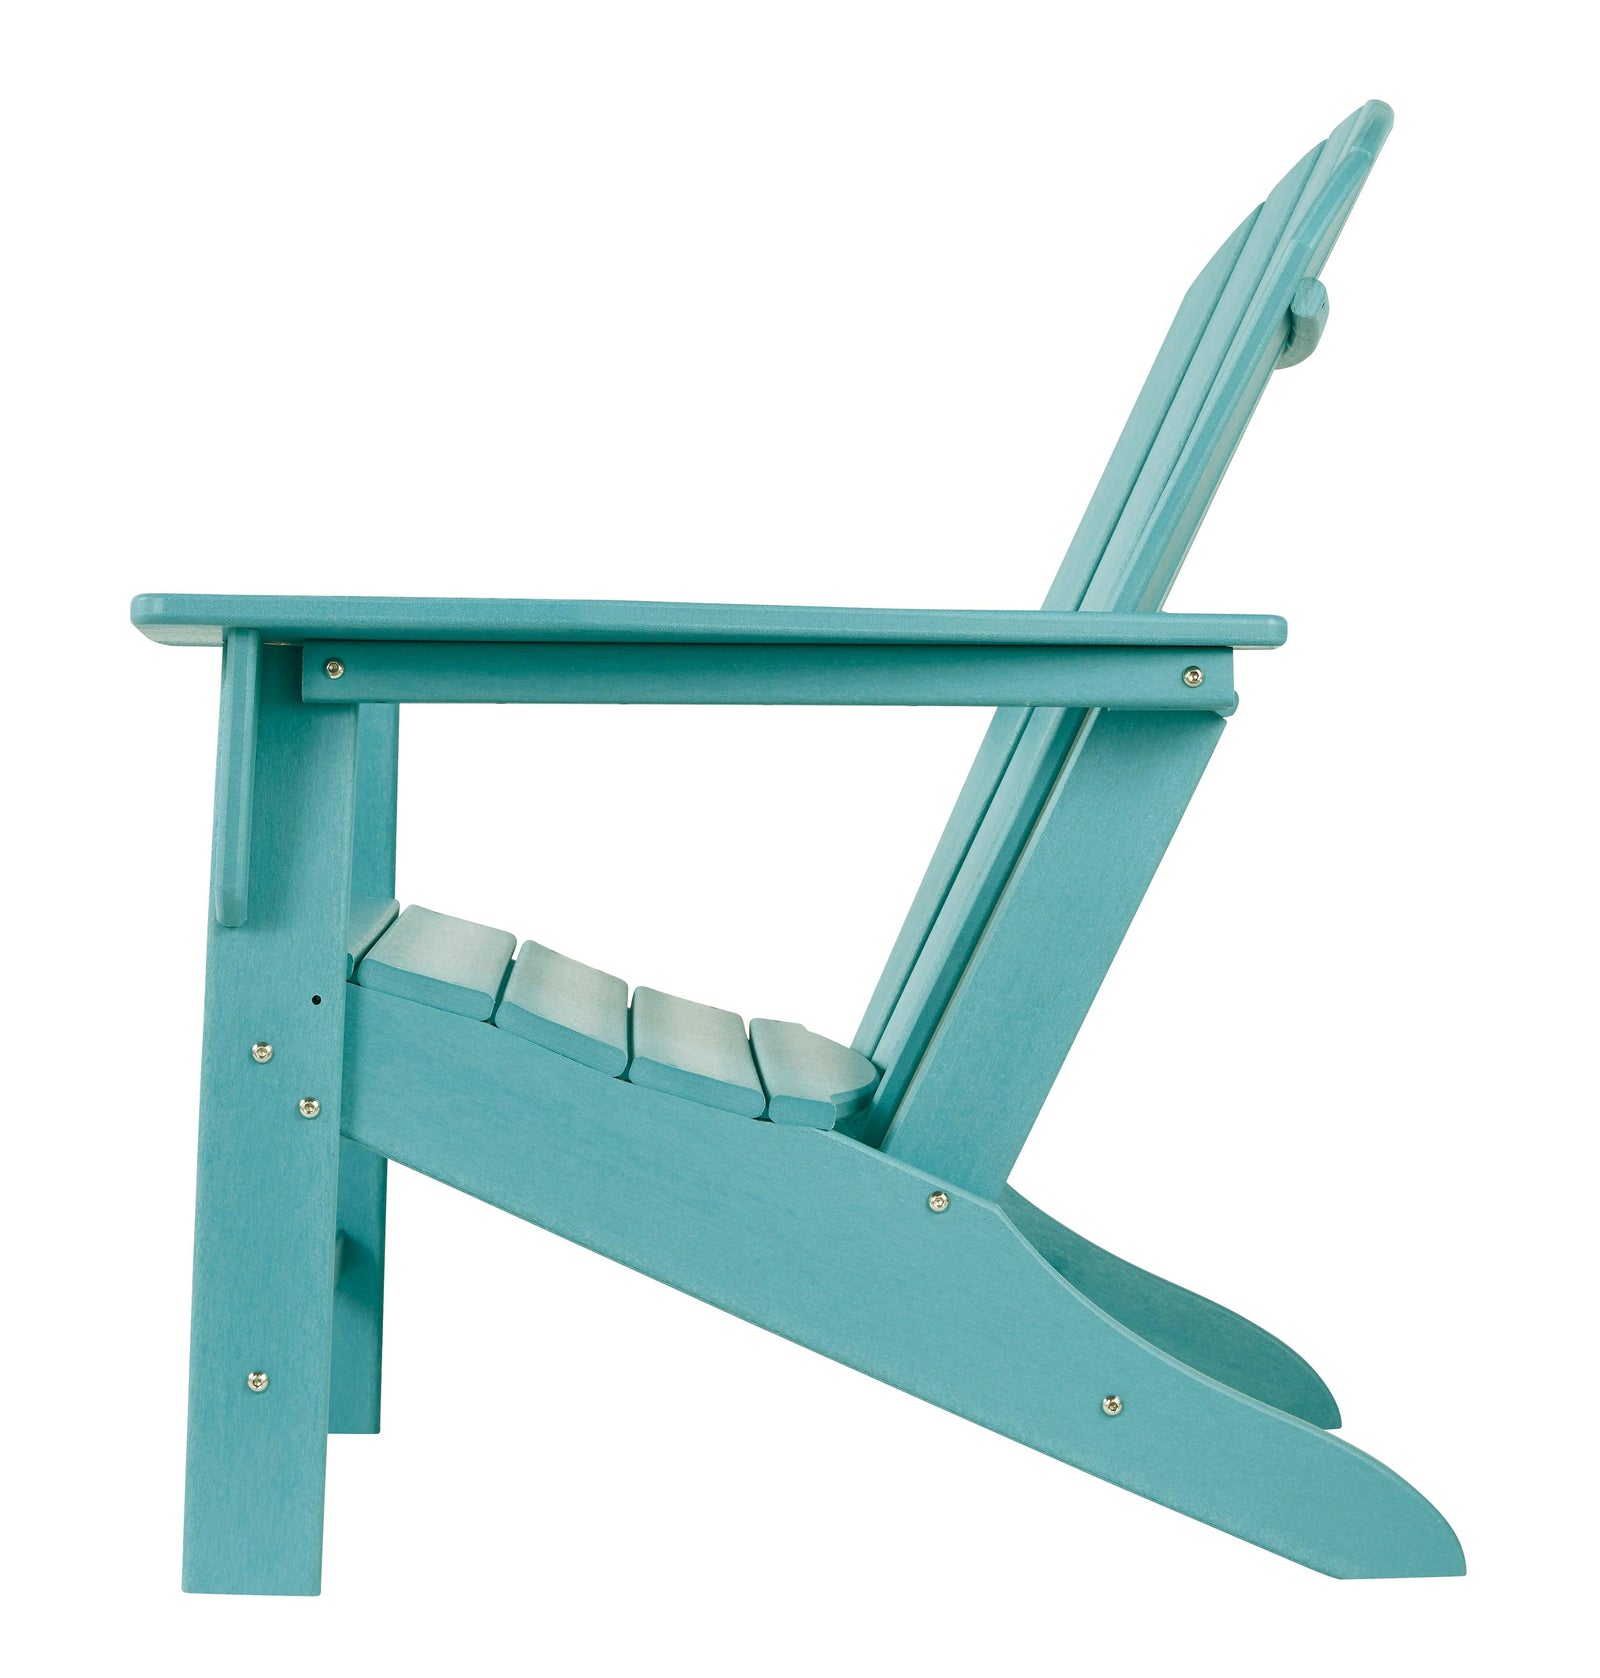 Sundown Treasure Turquoise Adirondack Chair - Ella Furniture